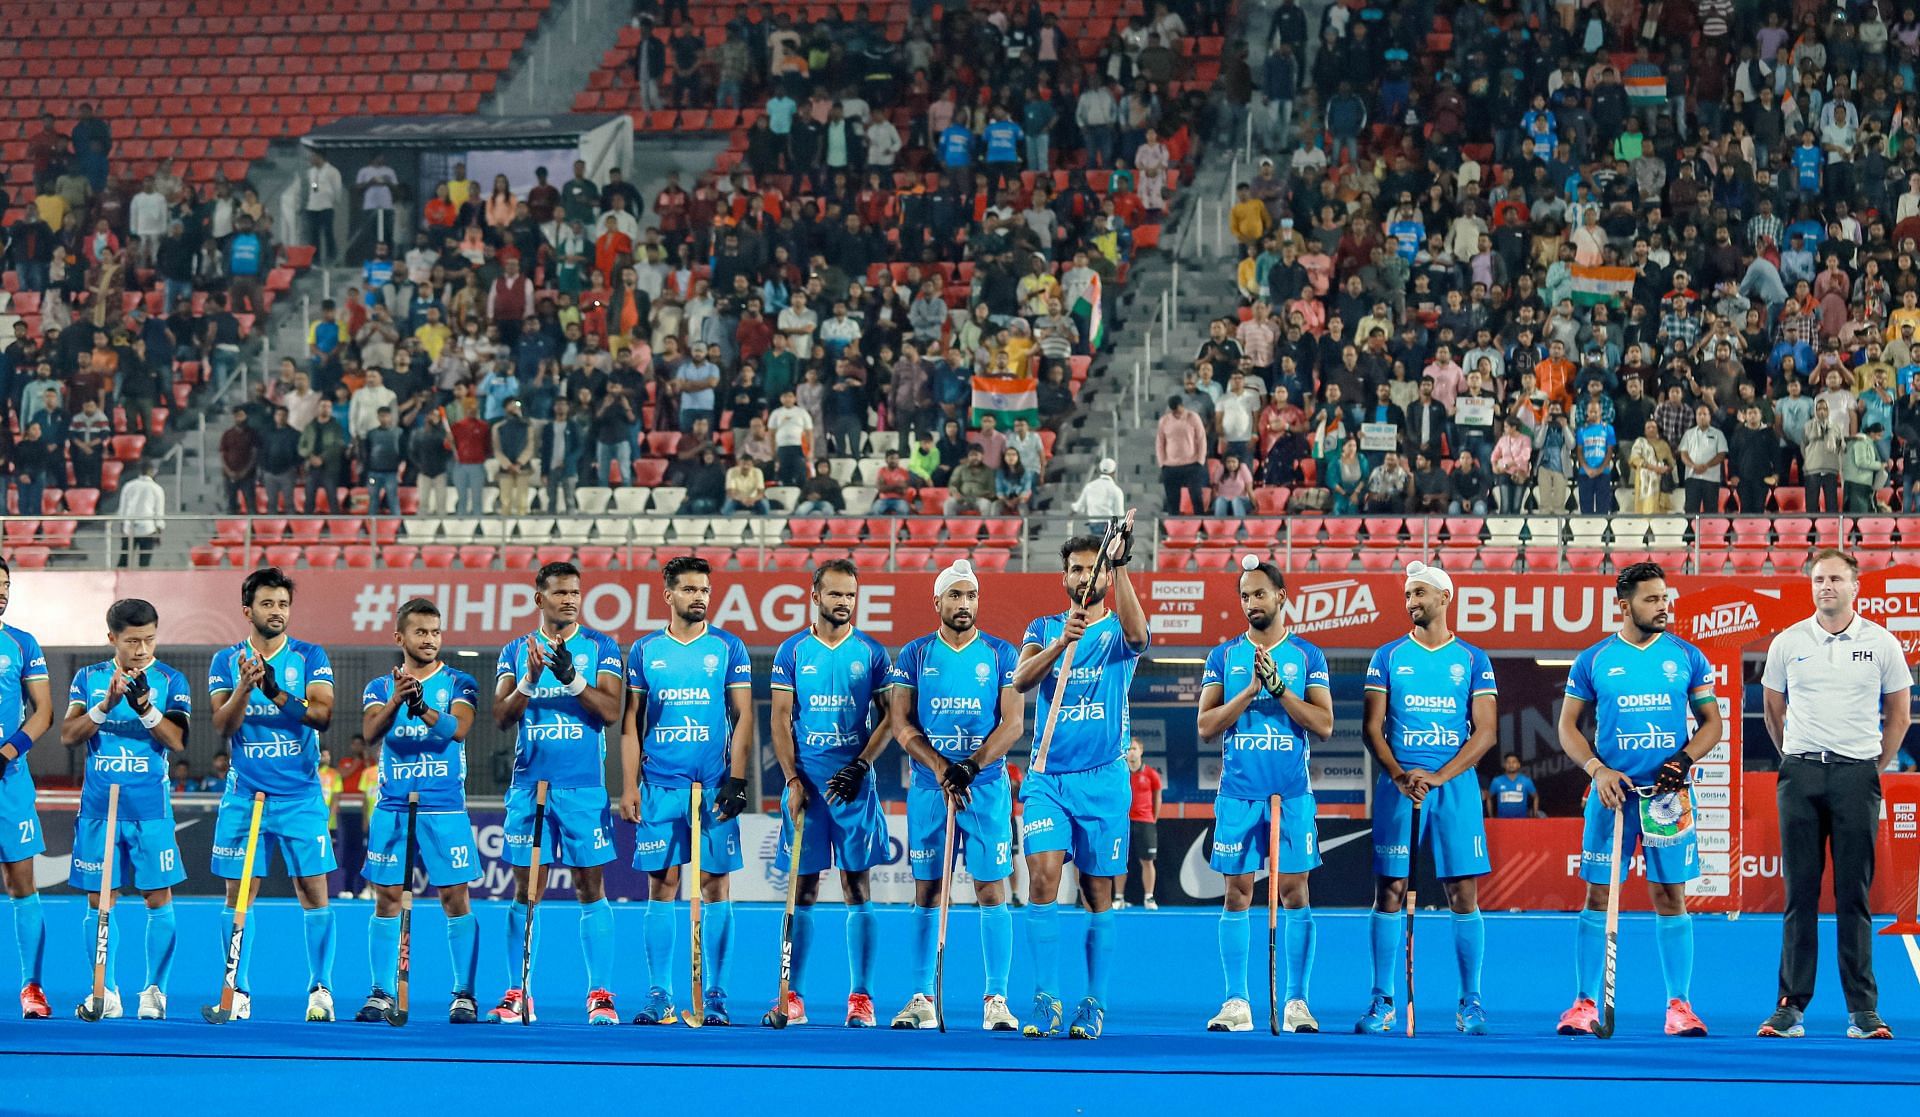 The Indian team produced an impressive effort against the Netherlands